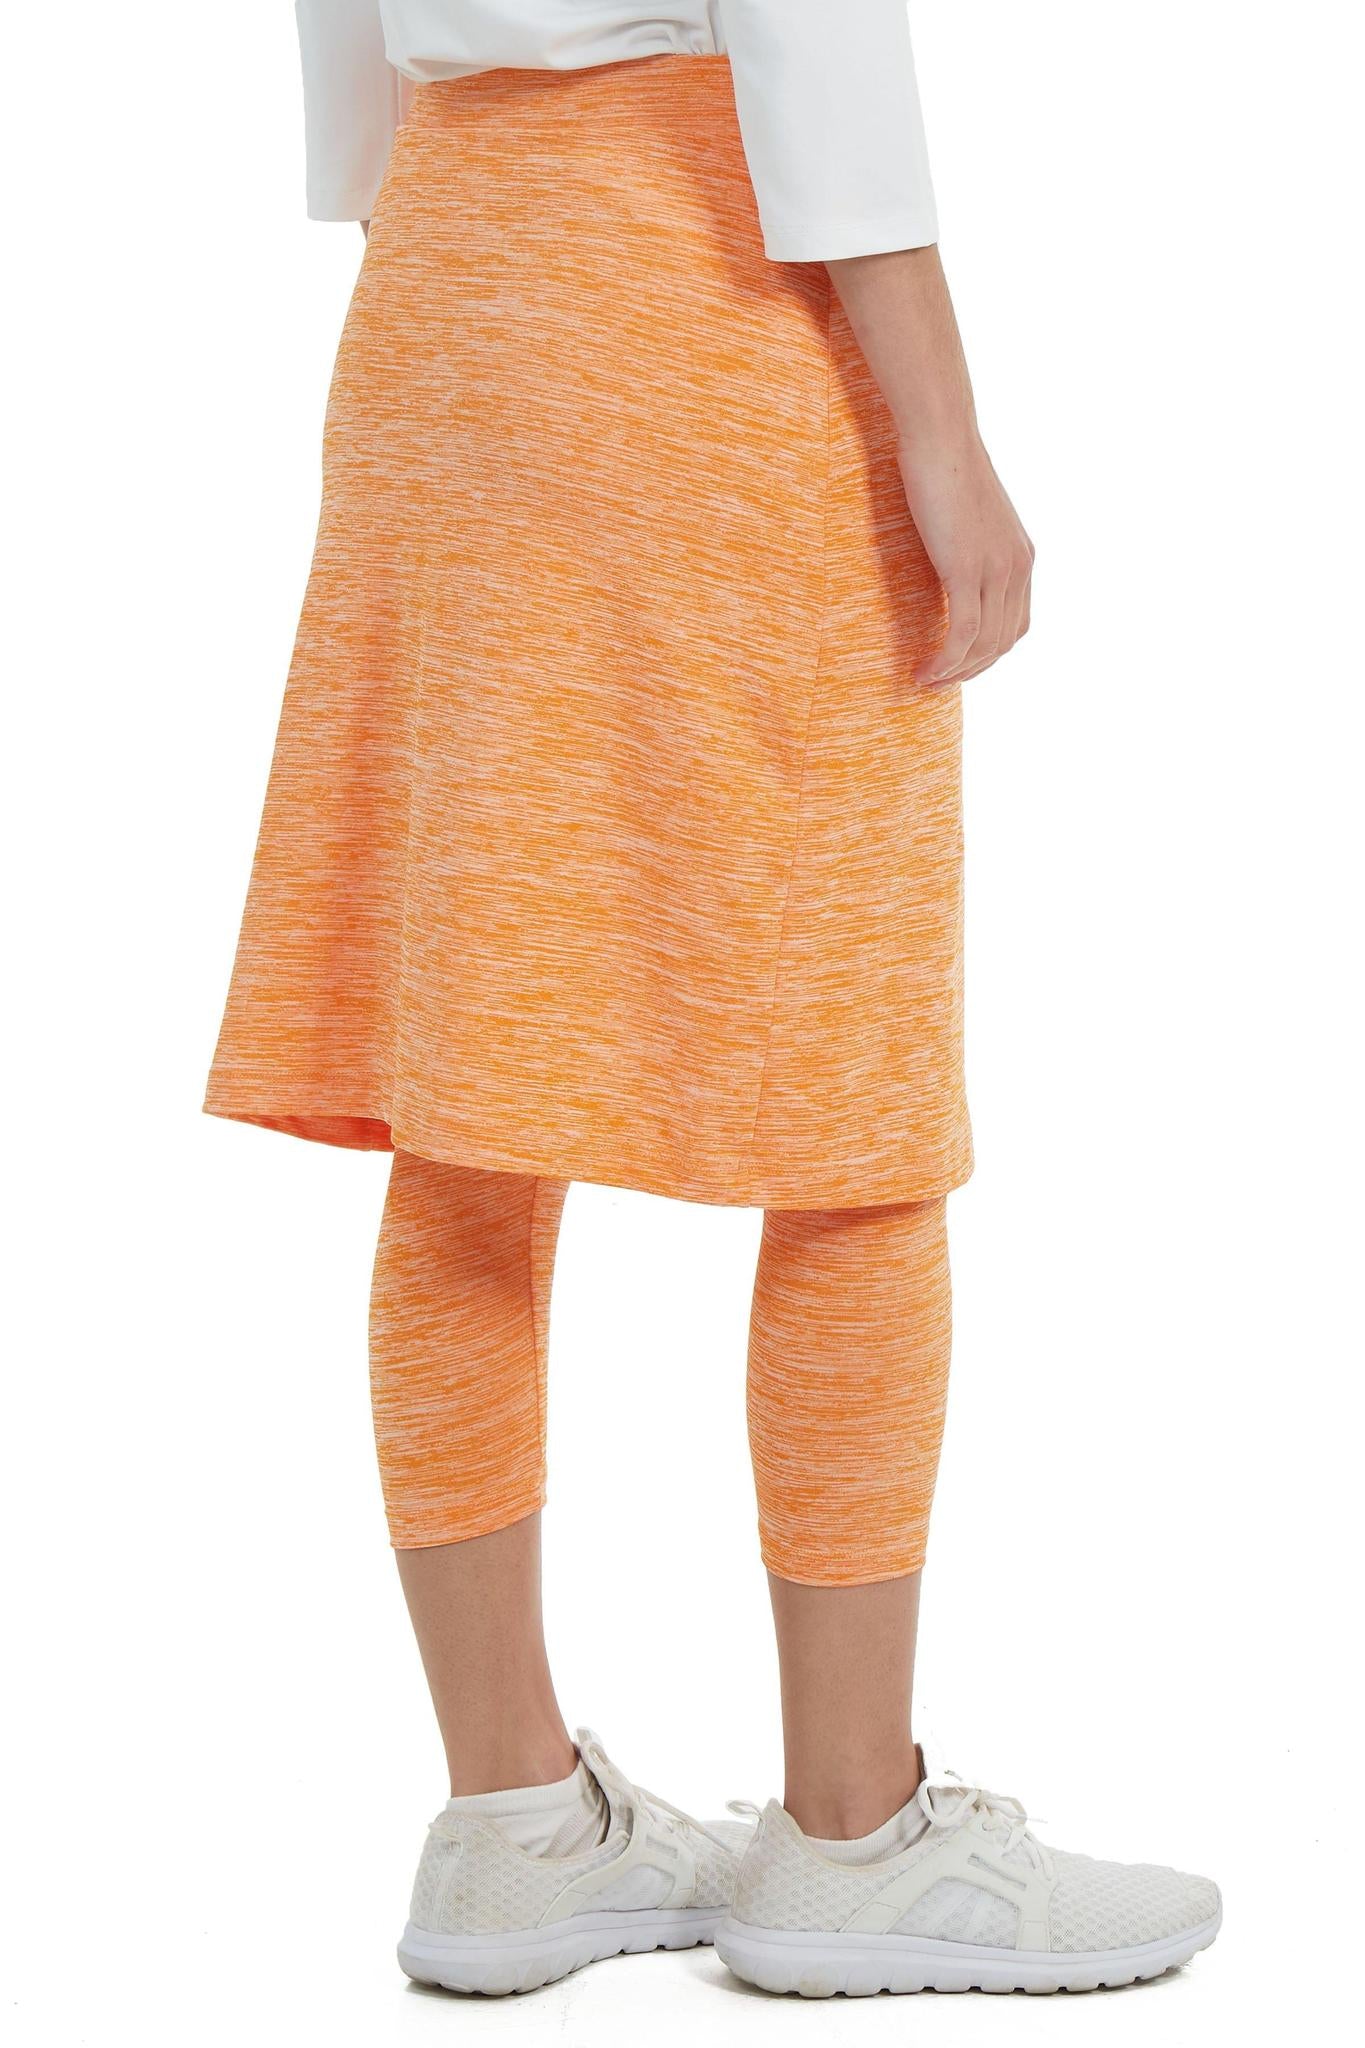 SpaceDye Snoga Athletic Skirt in Orange Slush